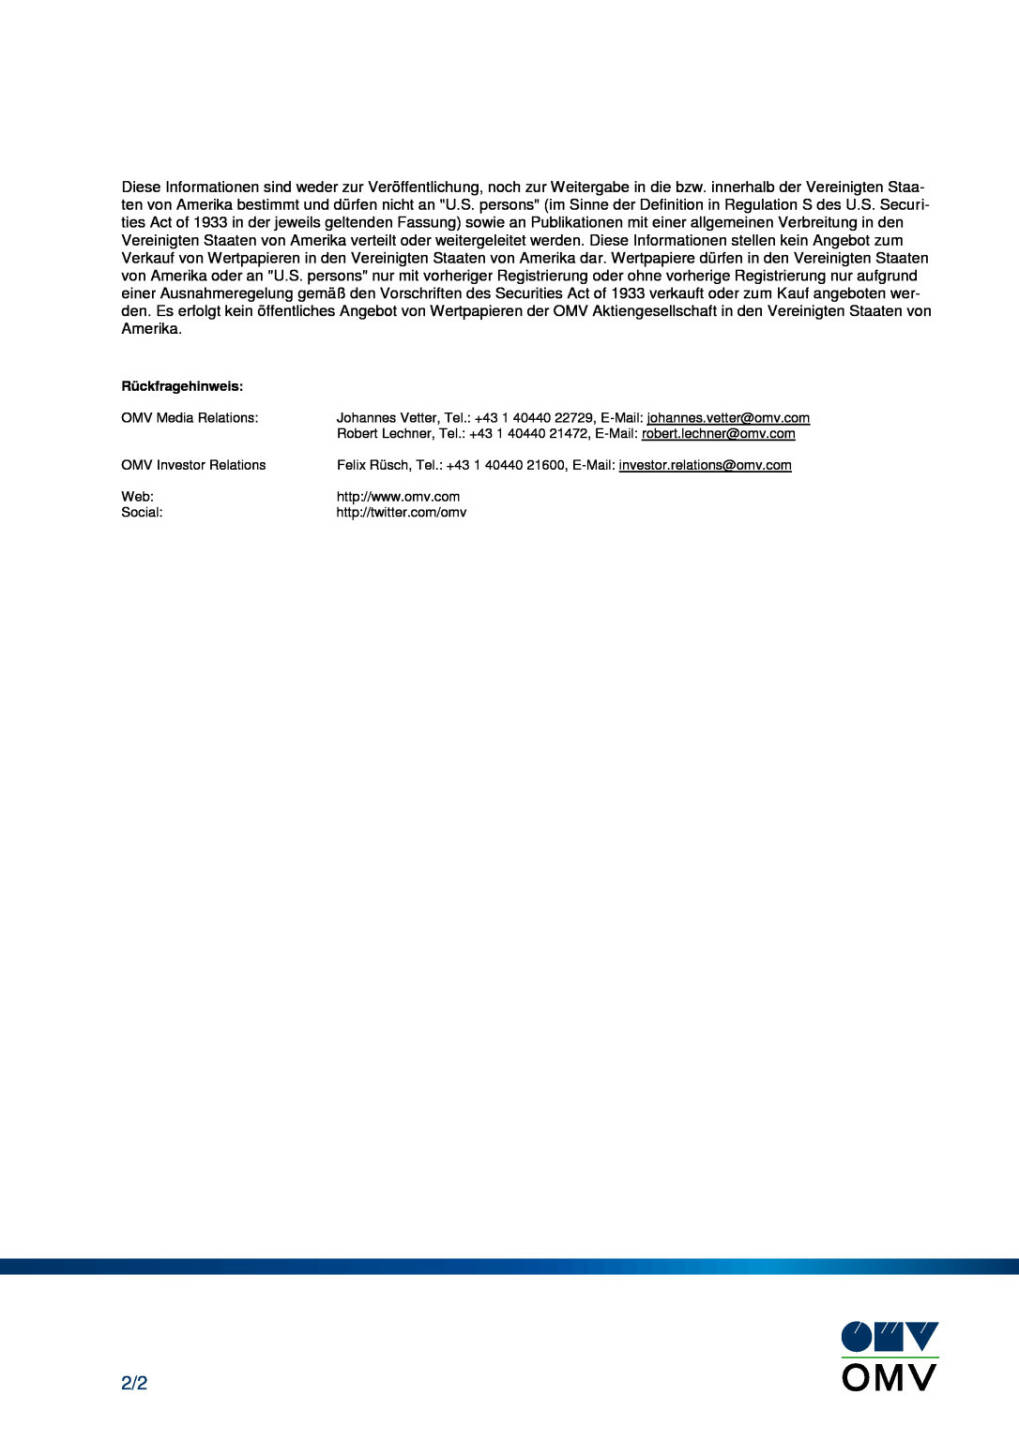 OMV plant Hybridschuldverschreibungen, Seite 2/2, komplettes Dokument unter http://boerse-social.com/static/uploads/file_283_omv_plant_hybridschuldverschreibungen.pdf